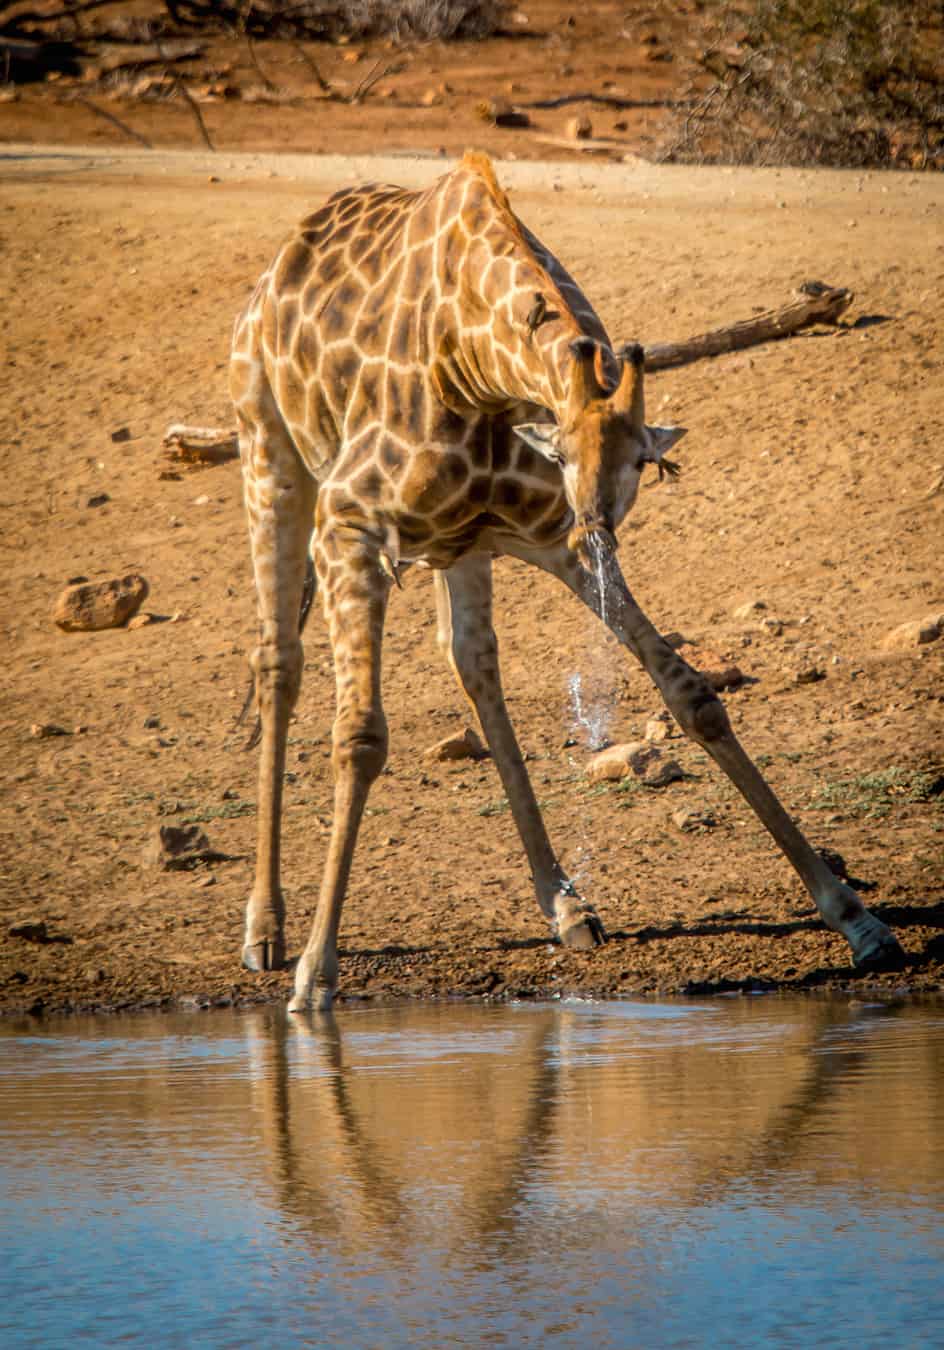 MasaiGiraffe drinking water in Kruger National Park, South Africa